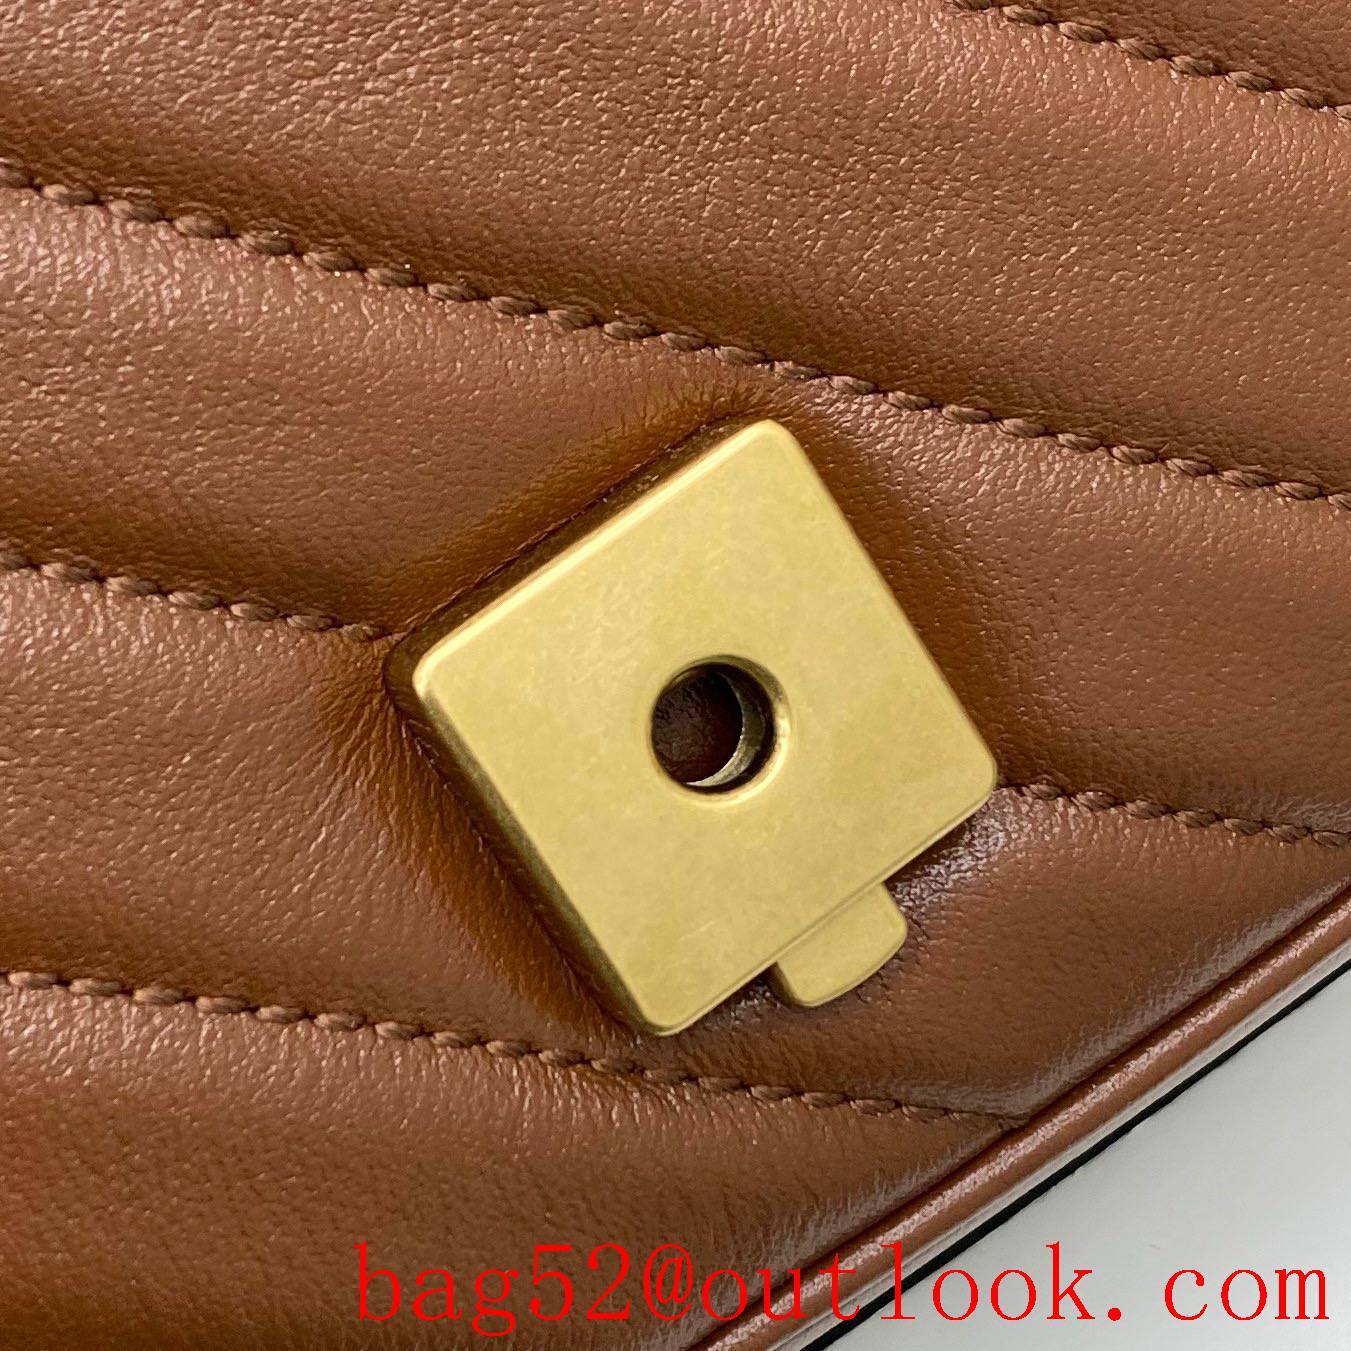 Gucci Now marmont original leather medium dark brown gold chain women's crossbody handbag